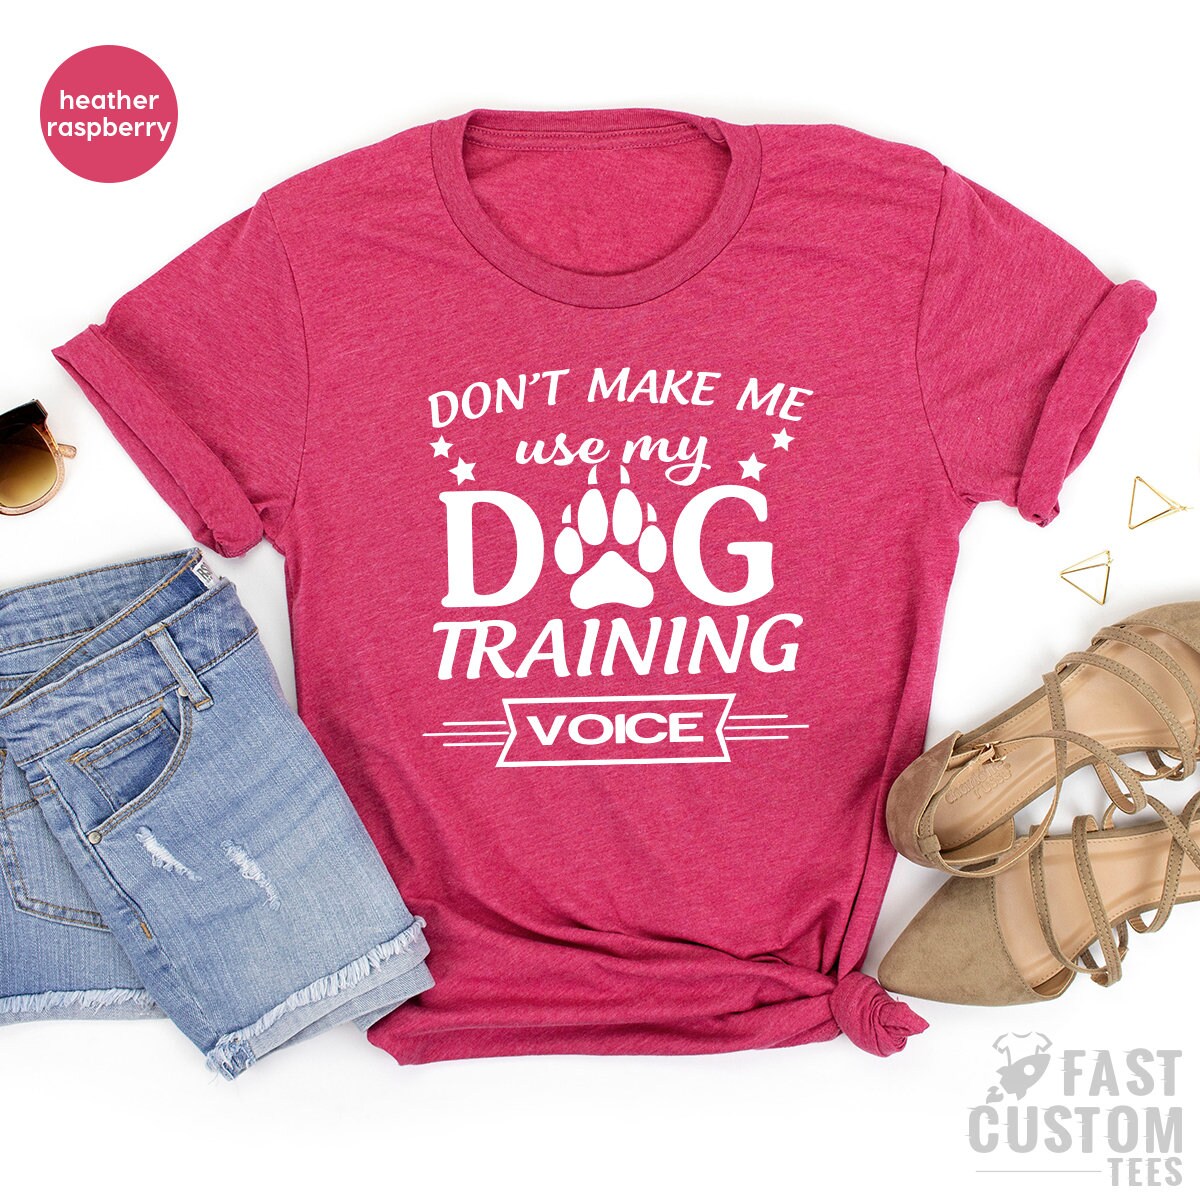 Funny Dog Shirt, Dog Dad TShirt, Dog Trainer T Shirt, Dog Traning Shirt, Don't Make Me Use My Dog Training Voice Shirt, Dog Lover T Shirt - Fastdeliverytees.com